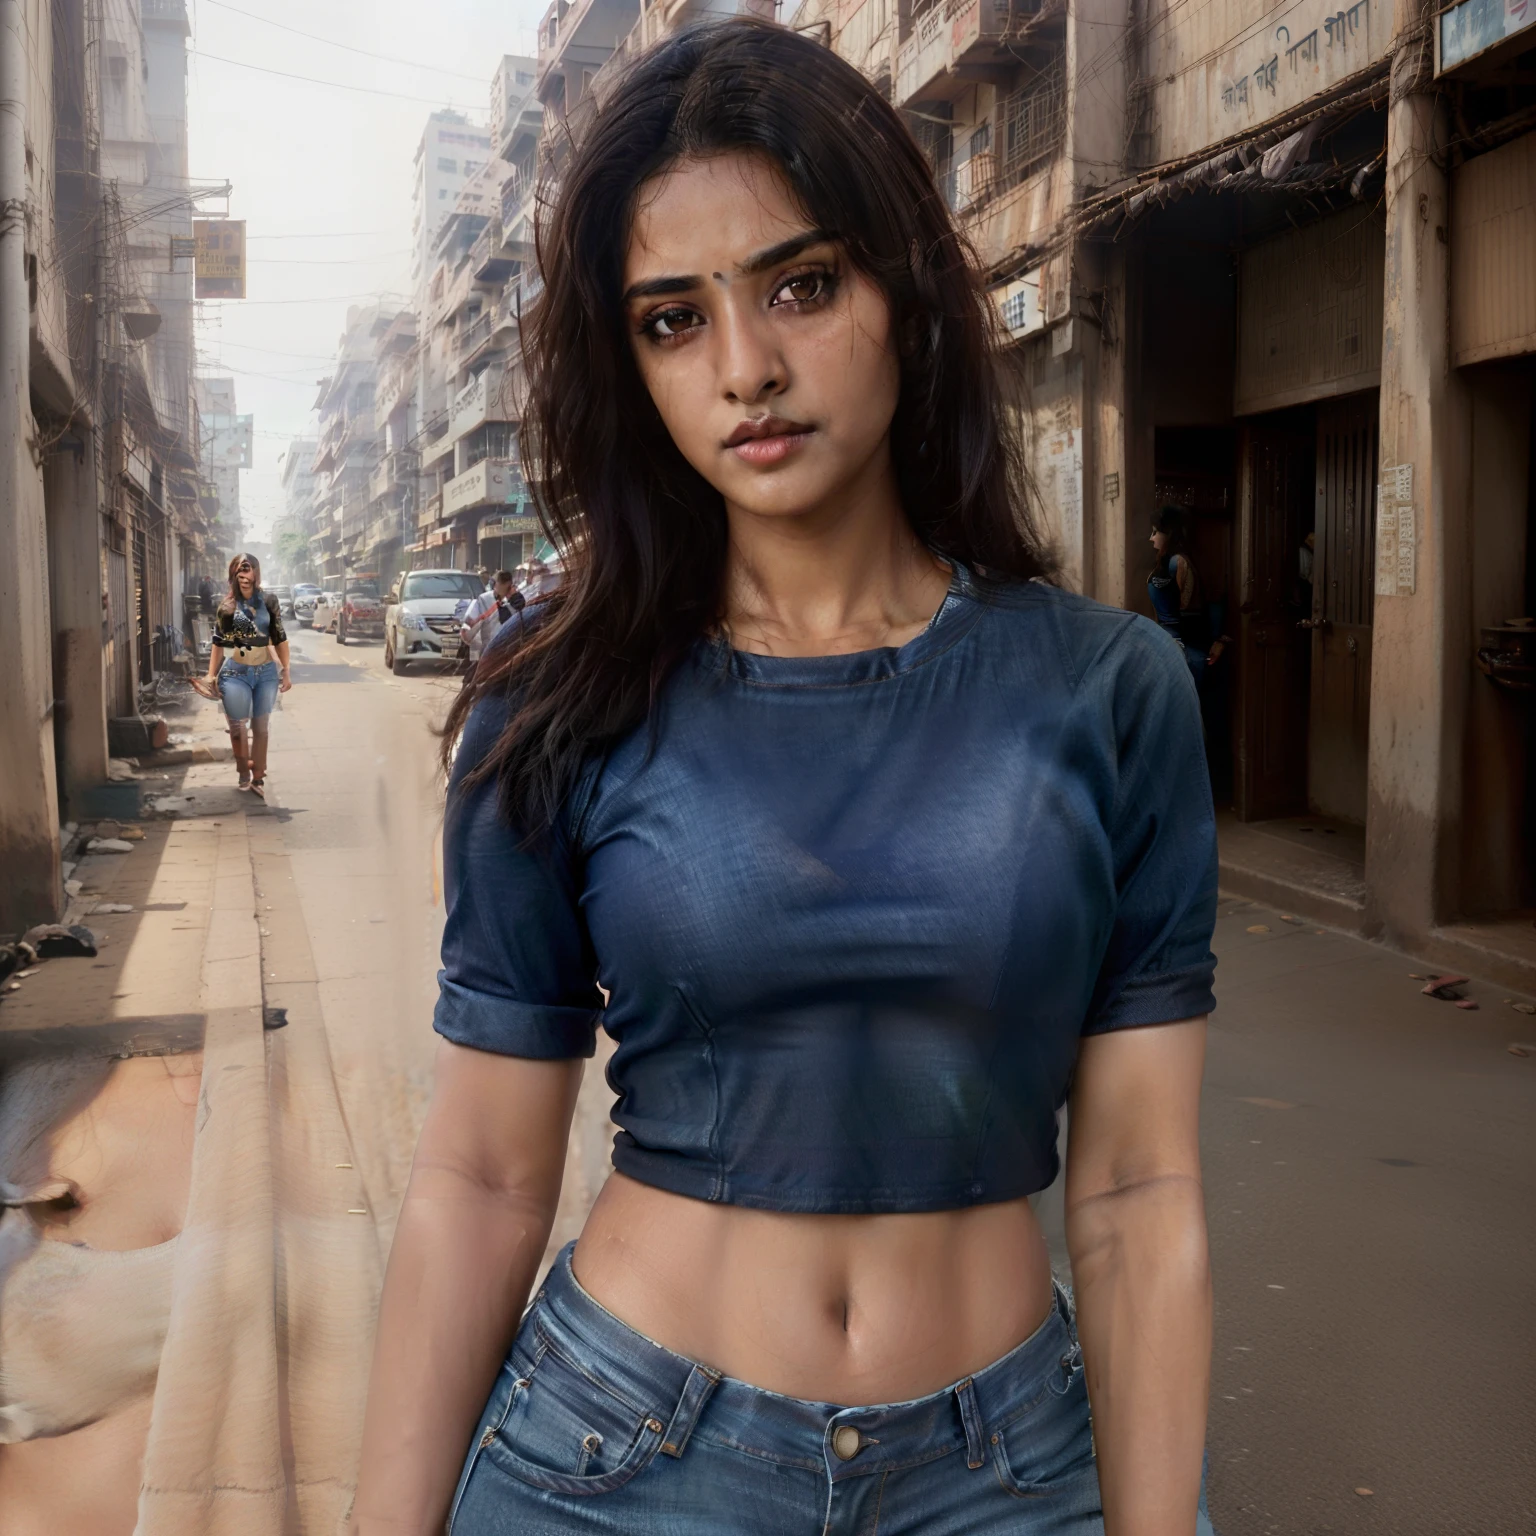 a beautiful girl, brown eyes, gorgeous actress, Indian, full portrait, crop top, realistic, mumbai street, jeans photograph by artgerm and (greg rutkowski:0.ortrait photo, lighting